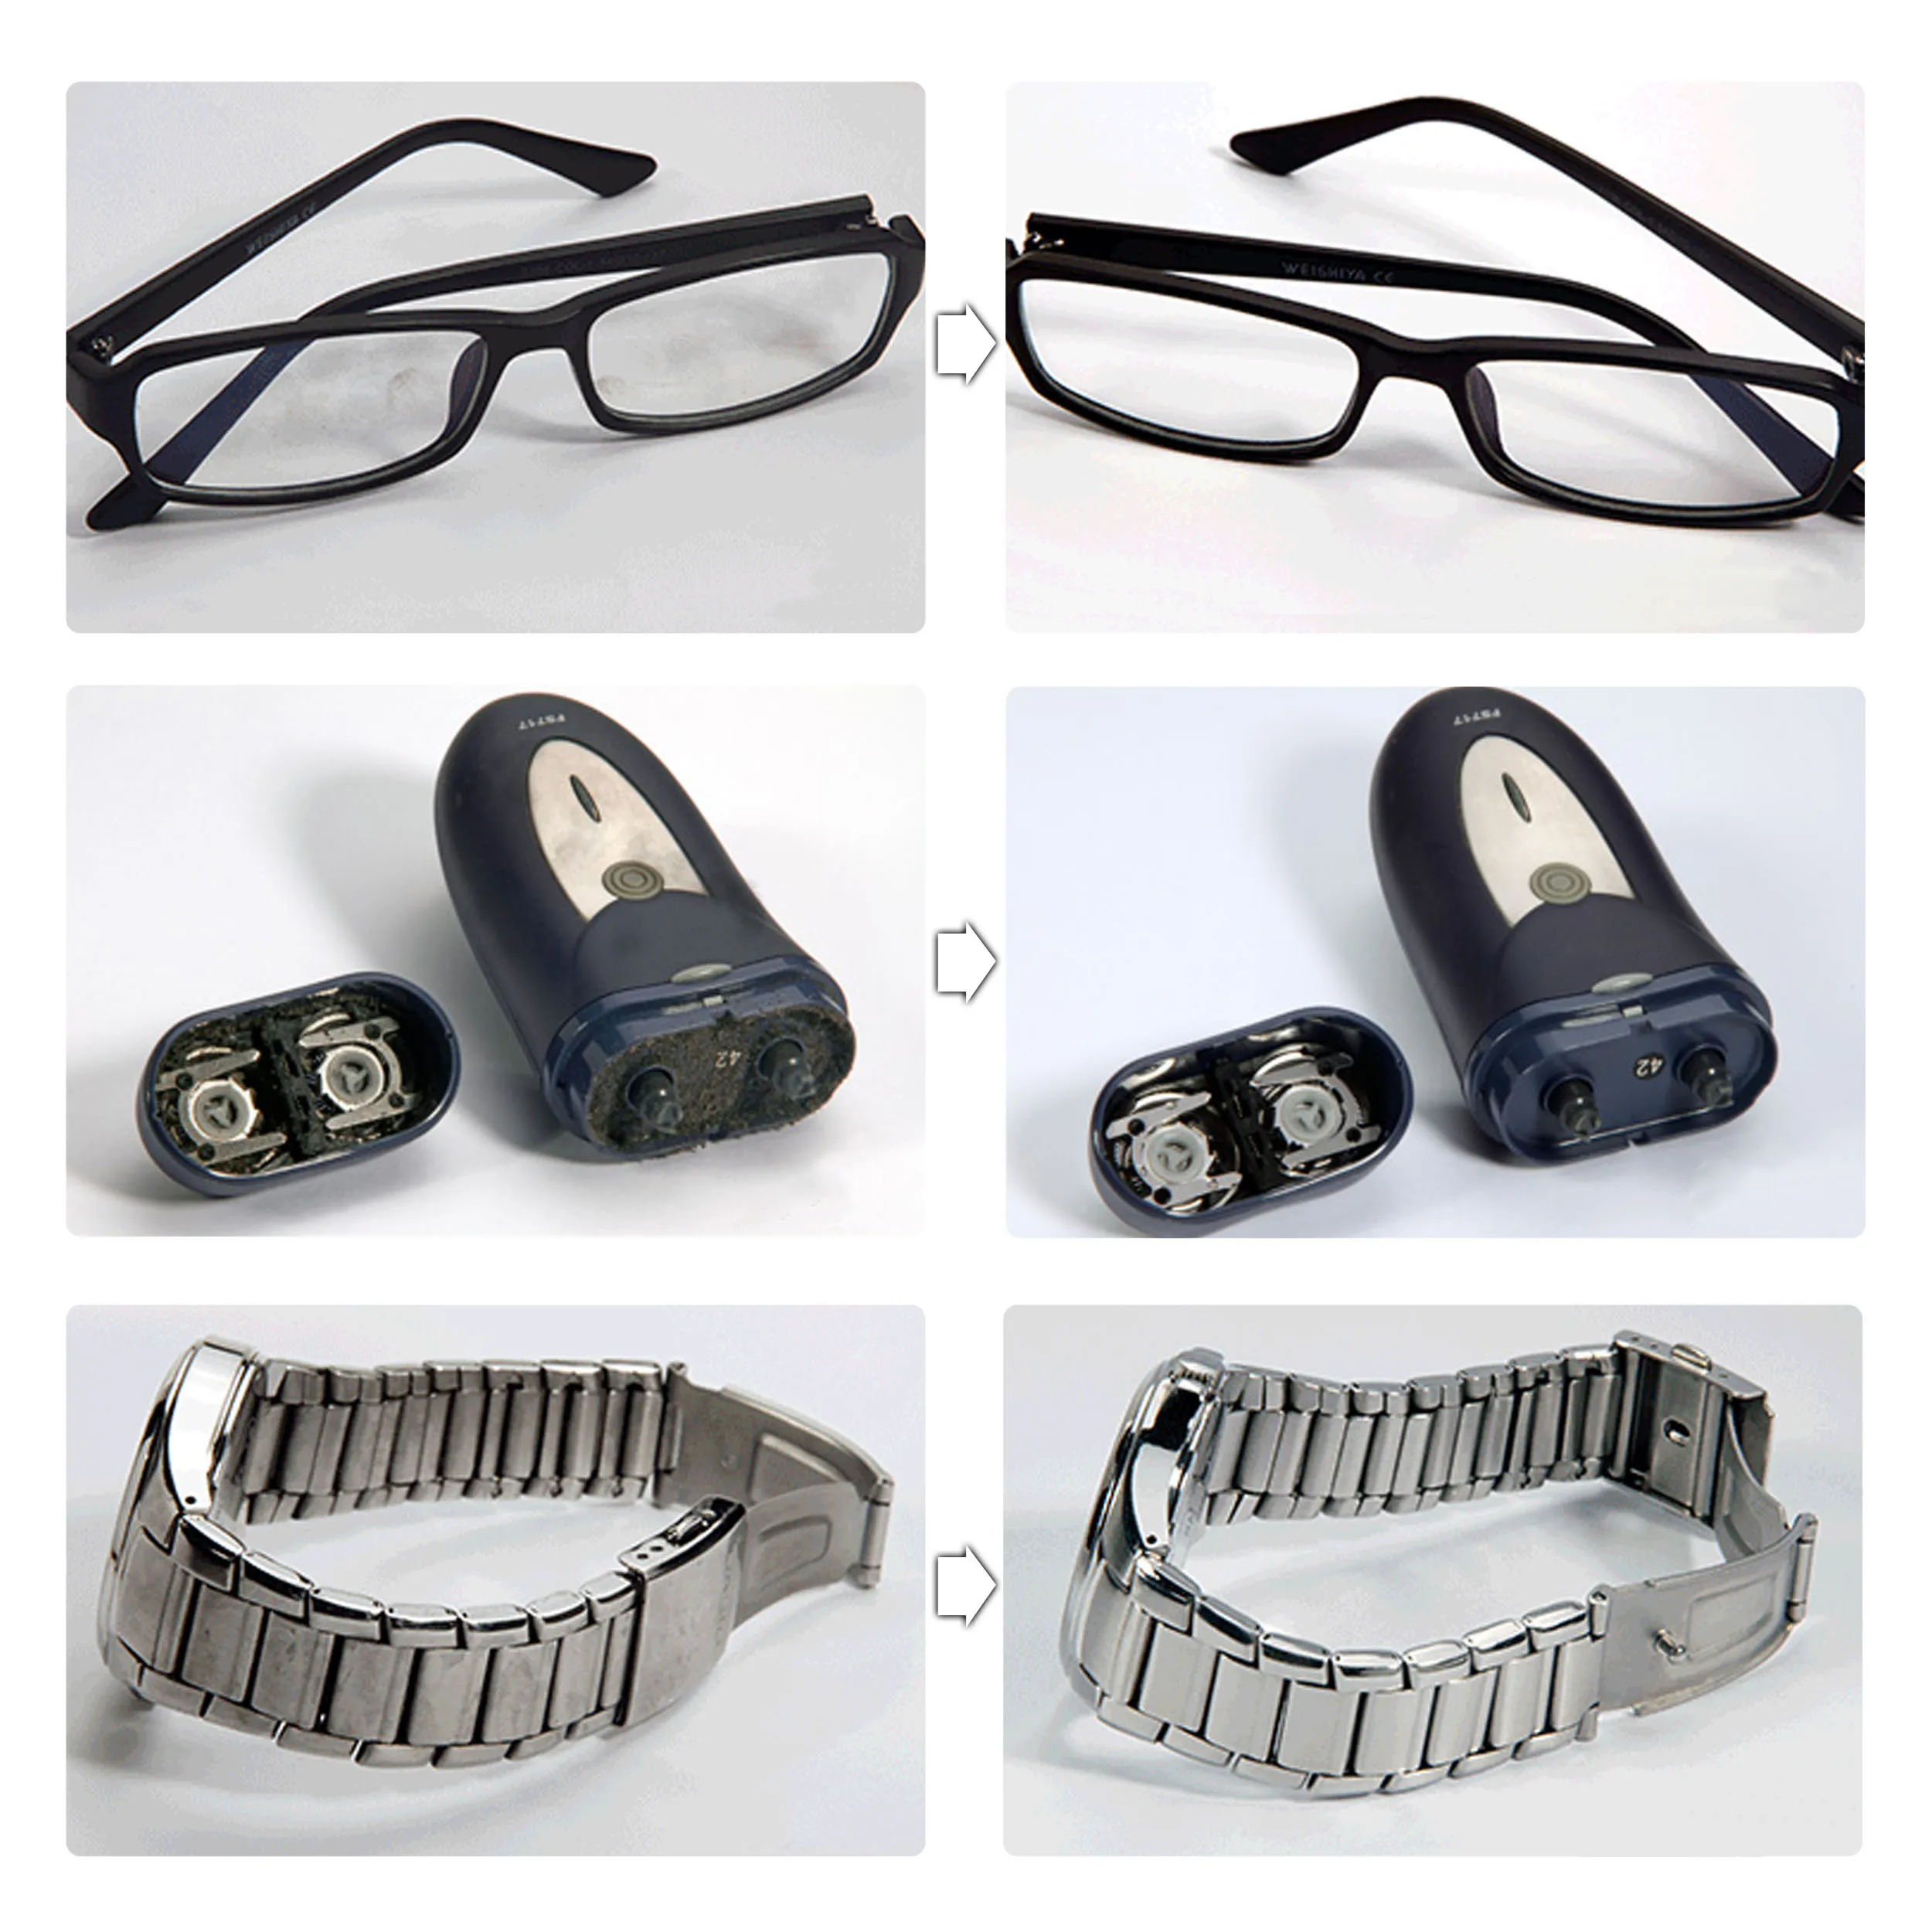 Digital eyeglass ultrasonic cleaner CD-4821